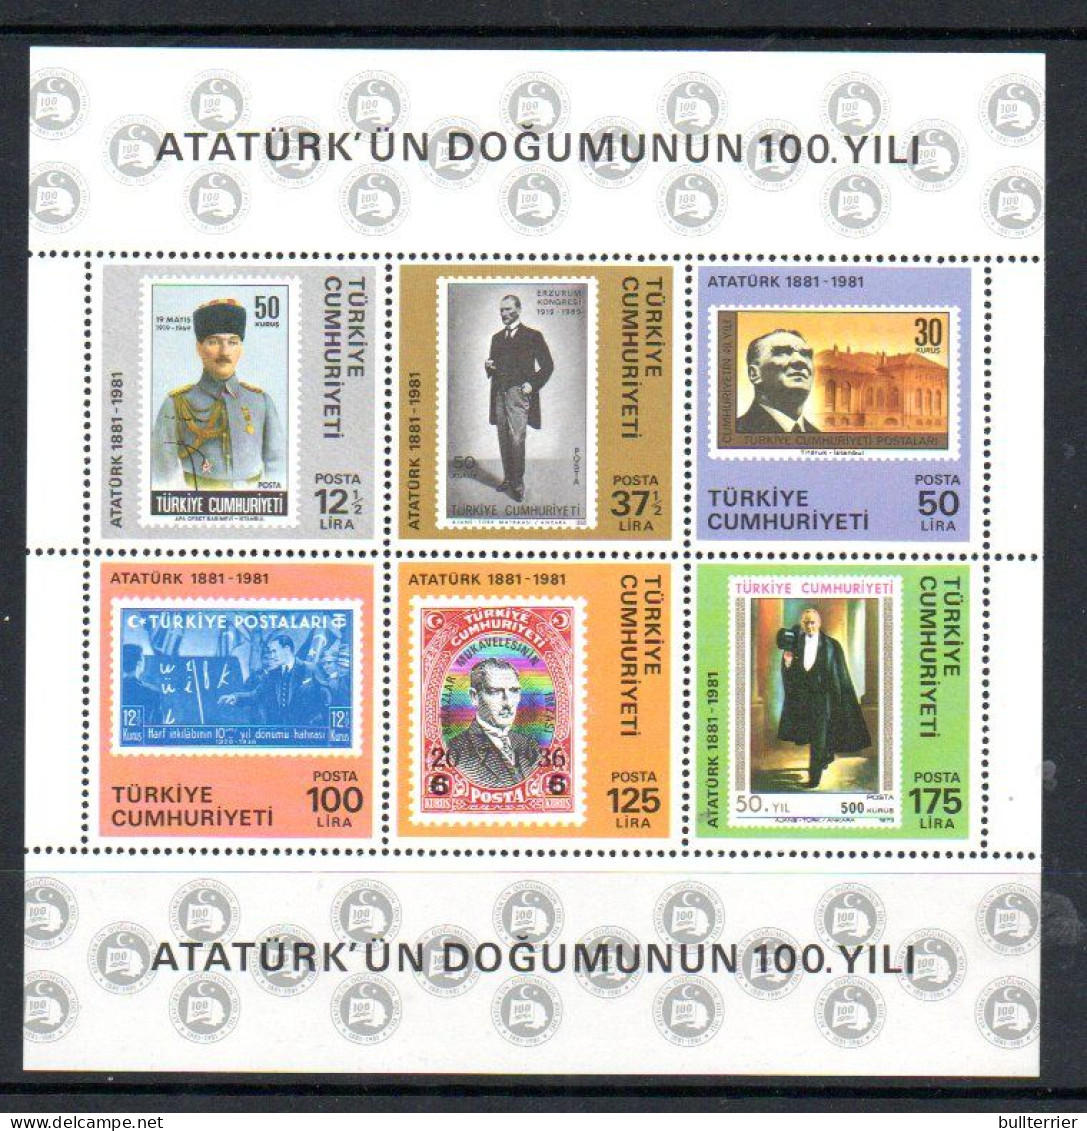 TURKEY - 1981 - KEMAL ATATURK CENTENARY SOUVENIR SHEET MINT NEVER HINGED , SG CAT £30 - Unused Stamps